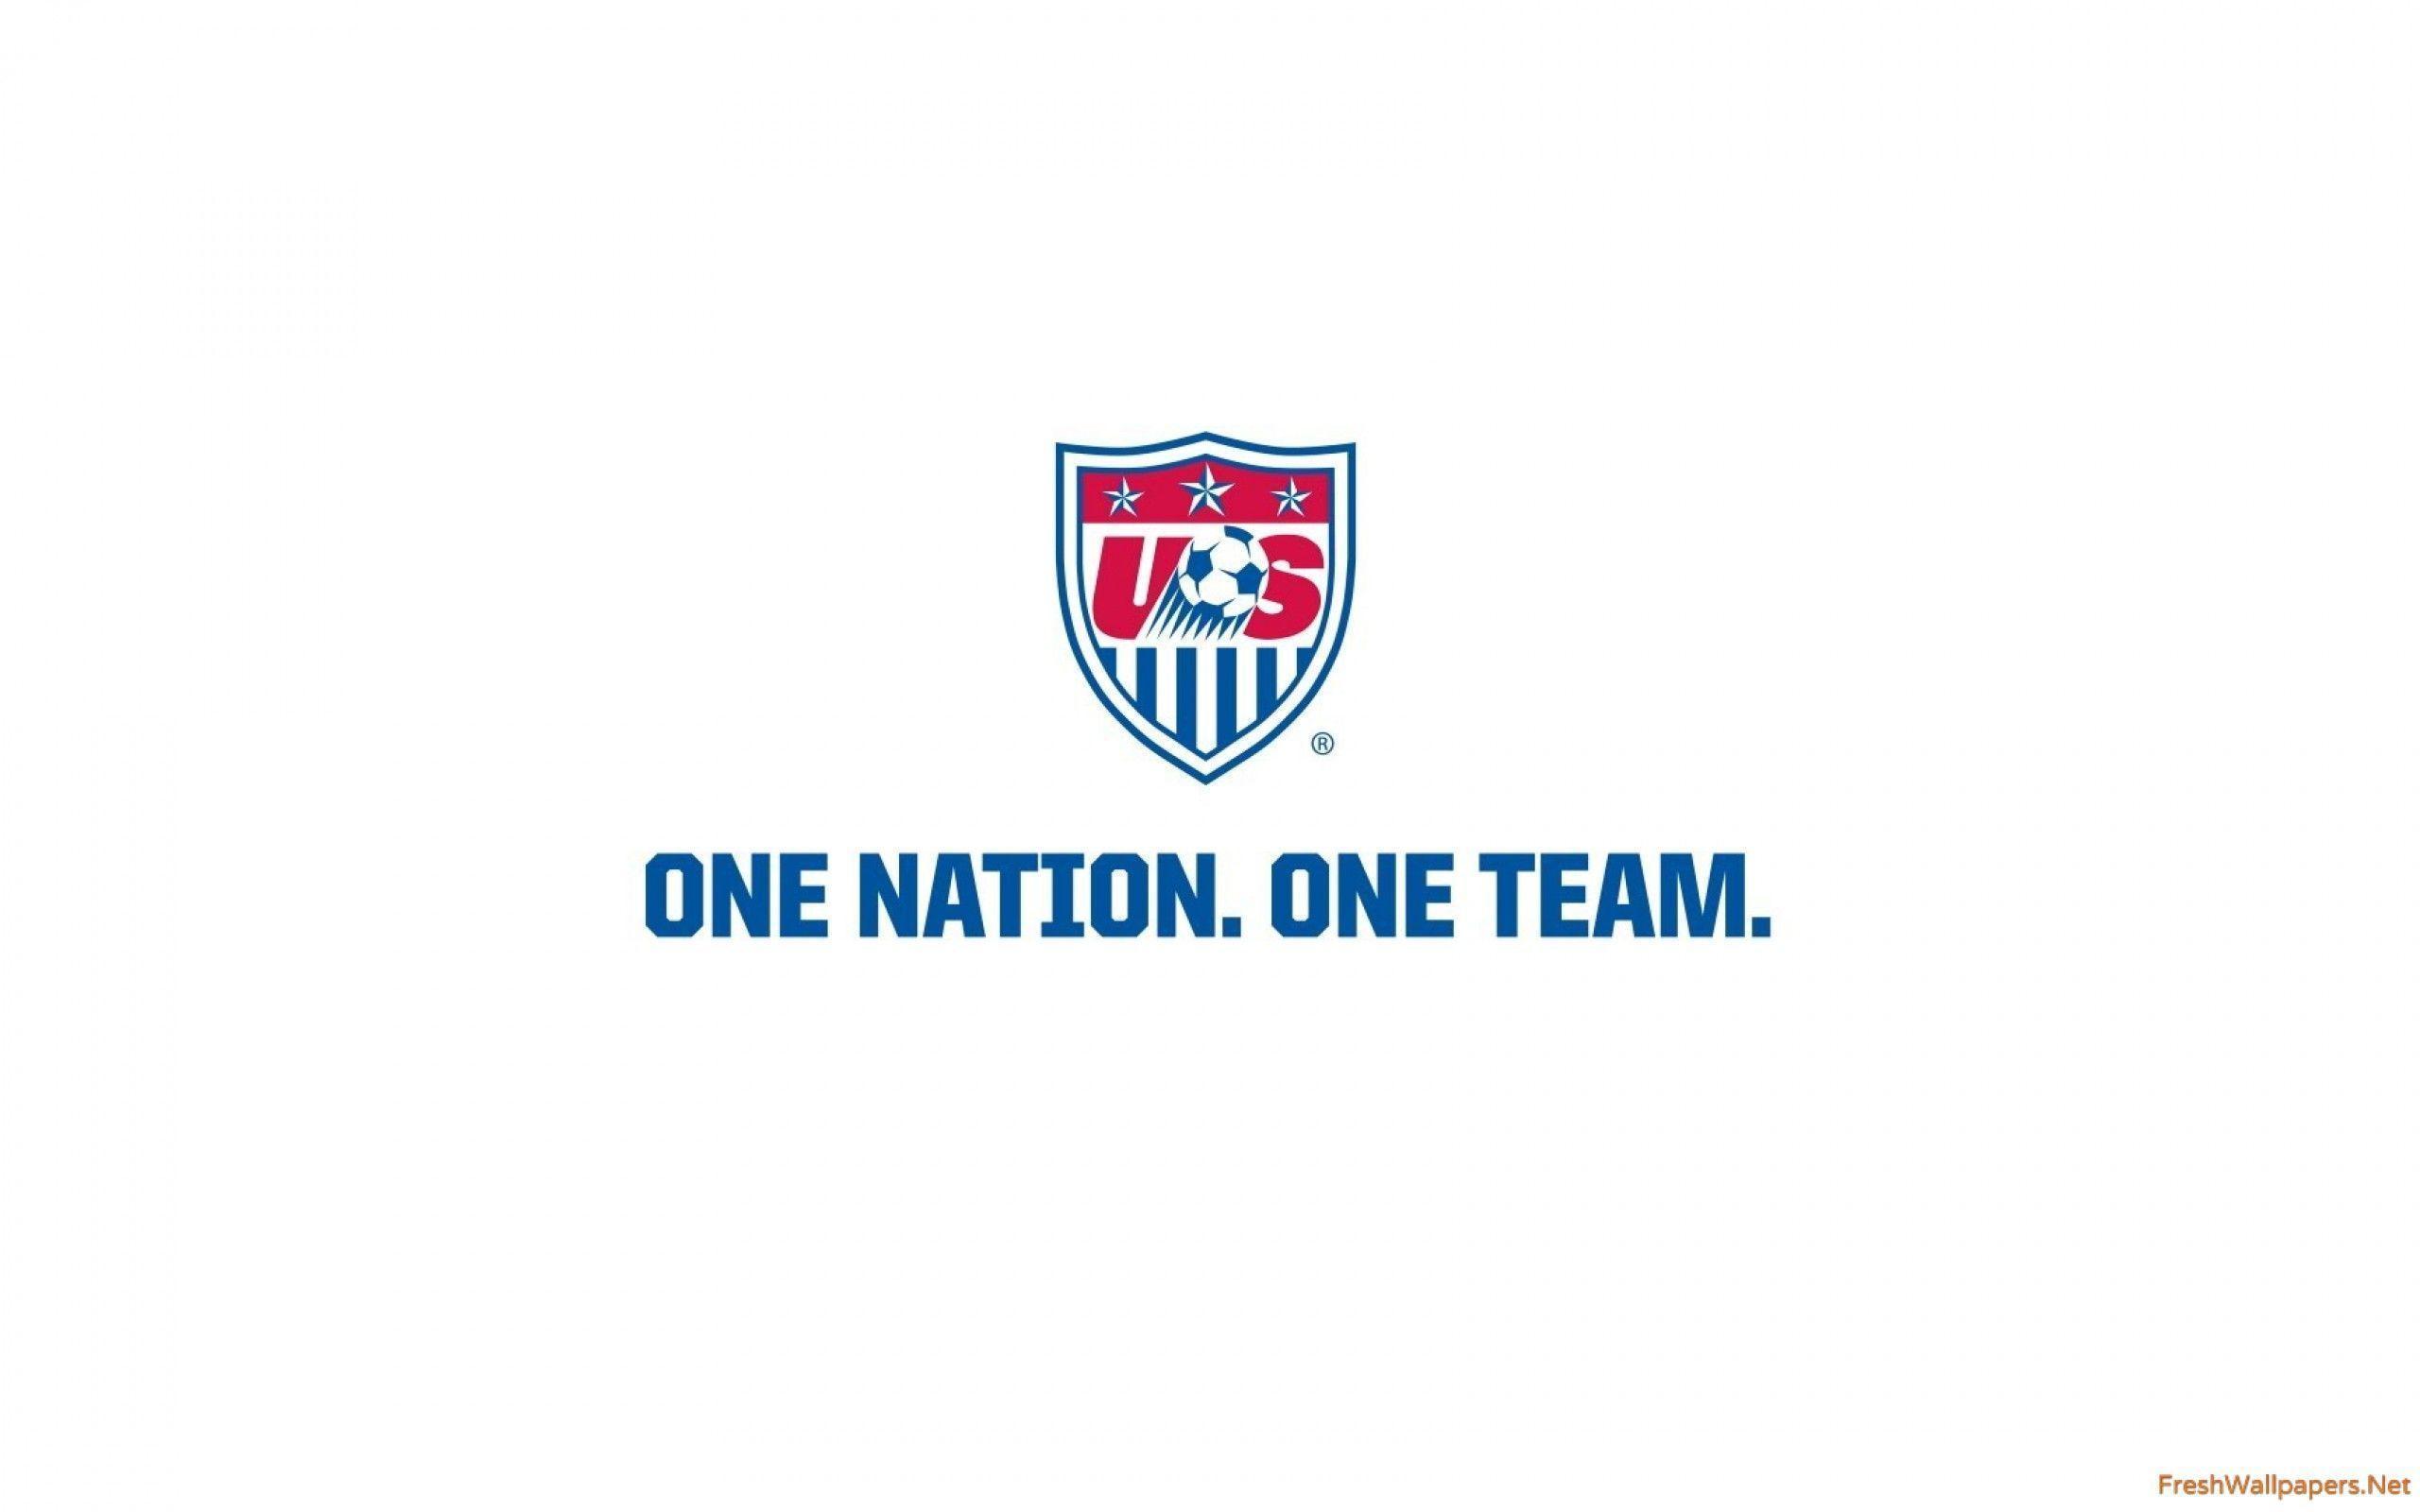 Usmnt one nation one team wallpaper